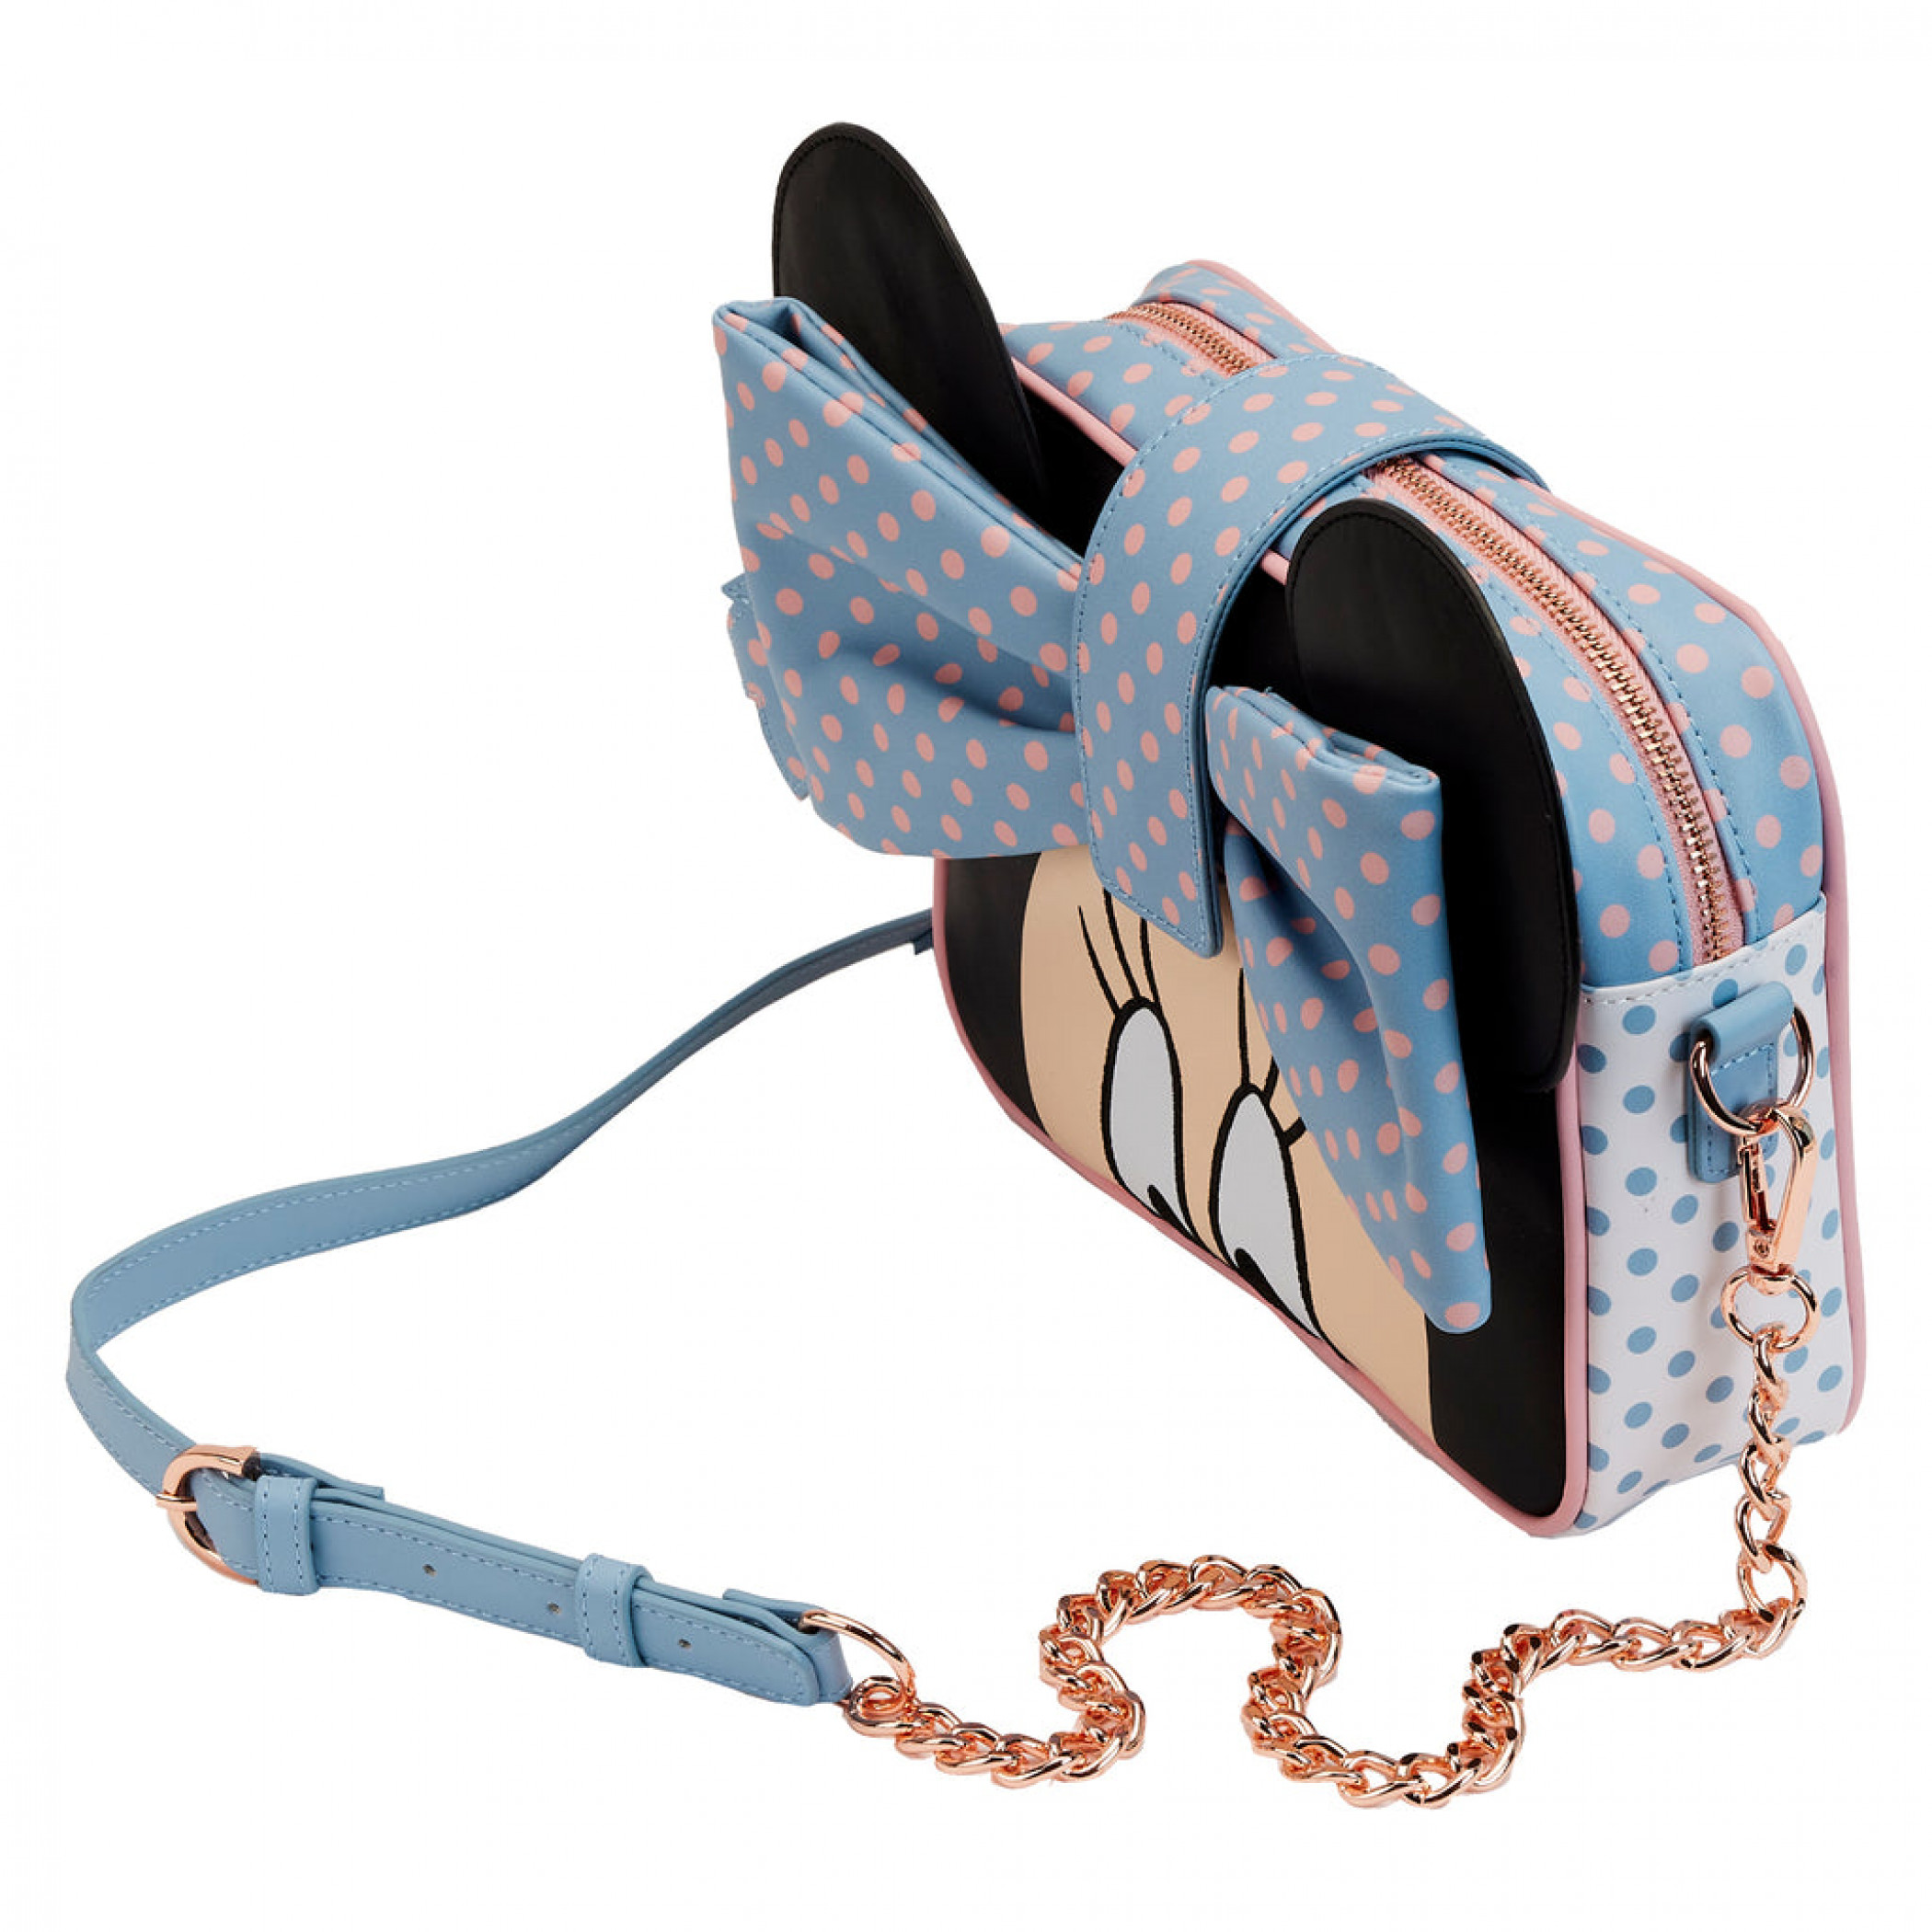 Disney Minnie Mouse Big Bow Crossbody Bag by Loungefly